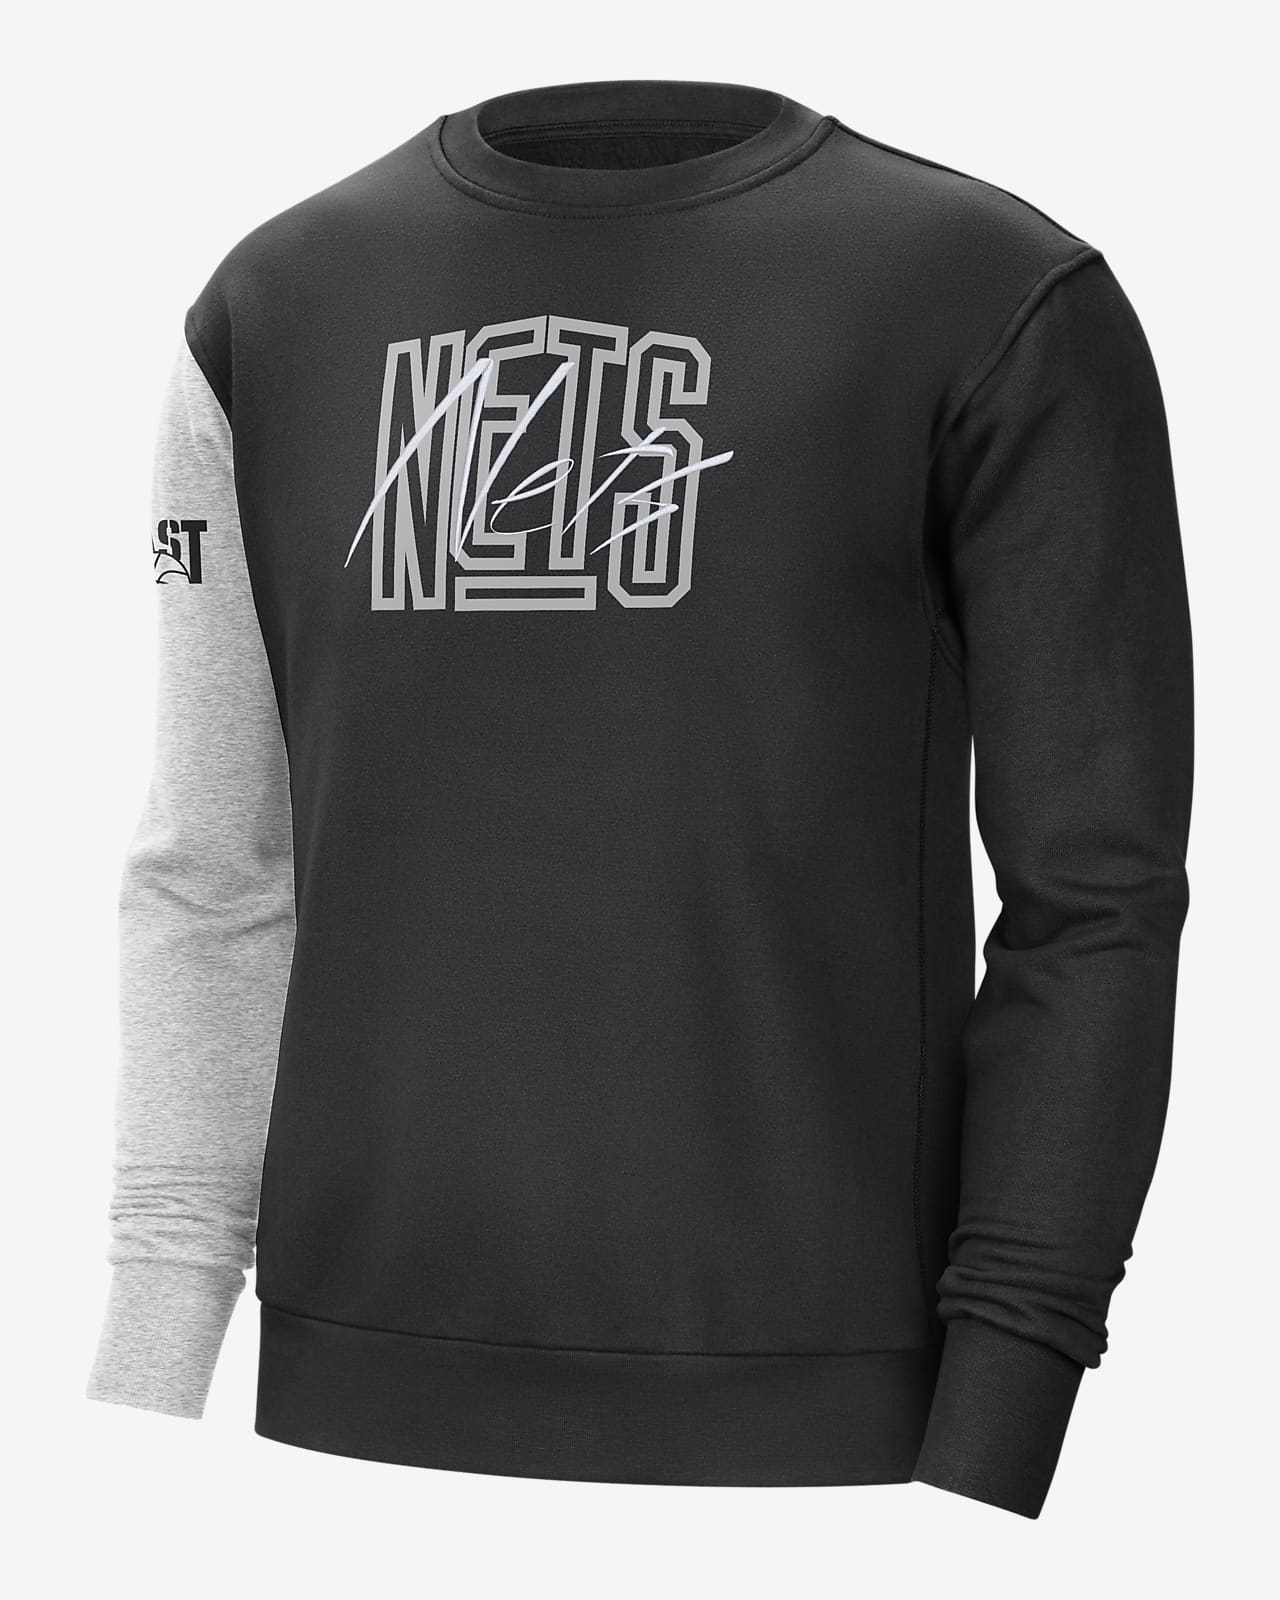 Brooklyn Nets Men's Nike NBA T-Shirt